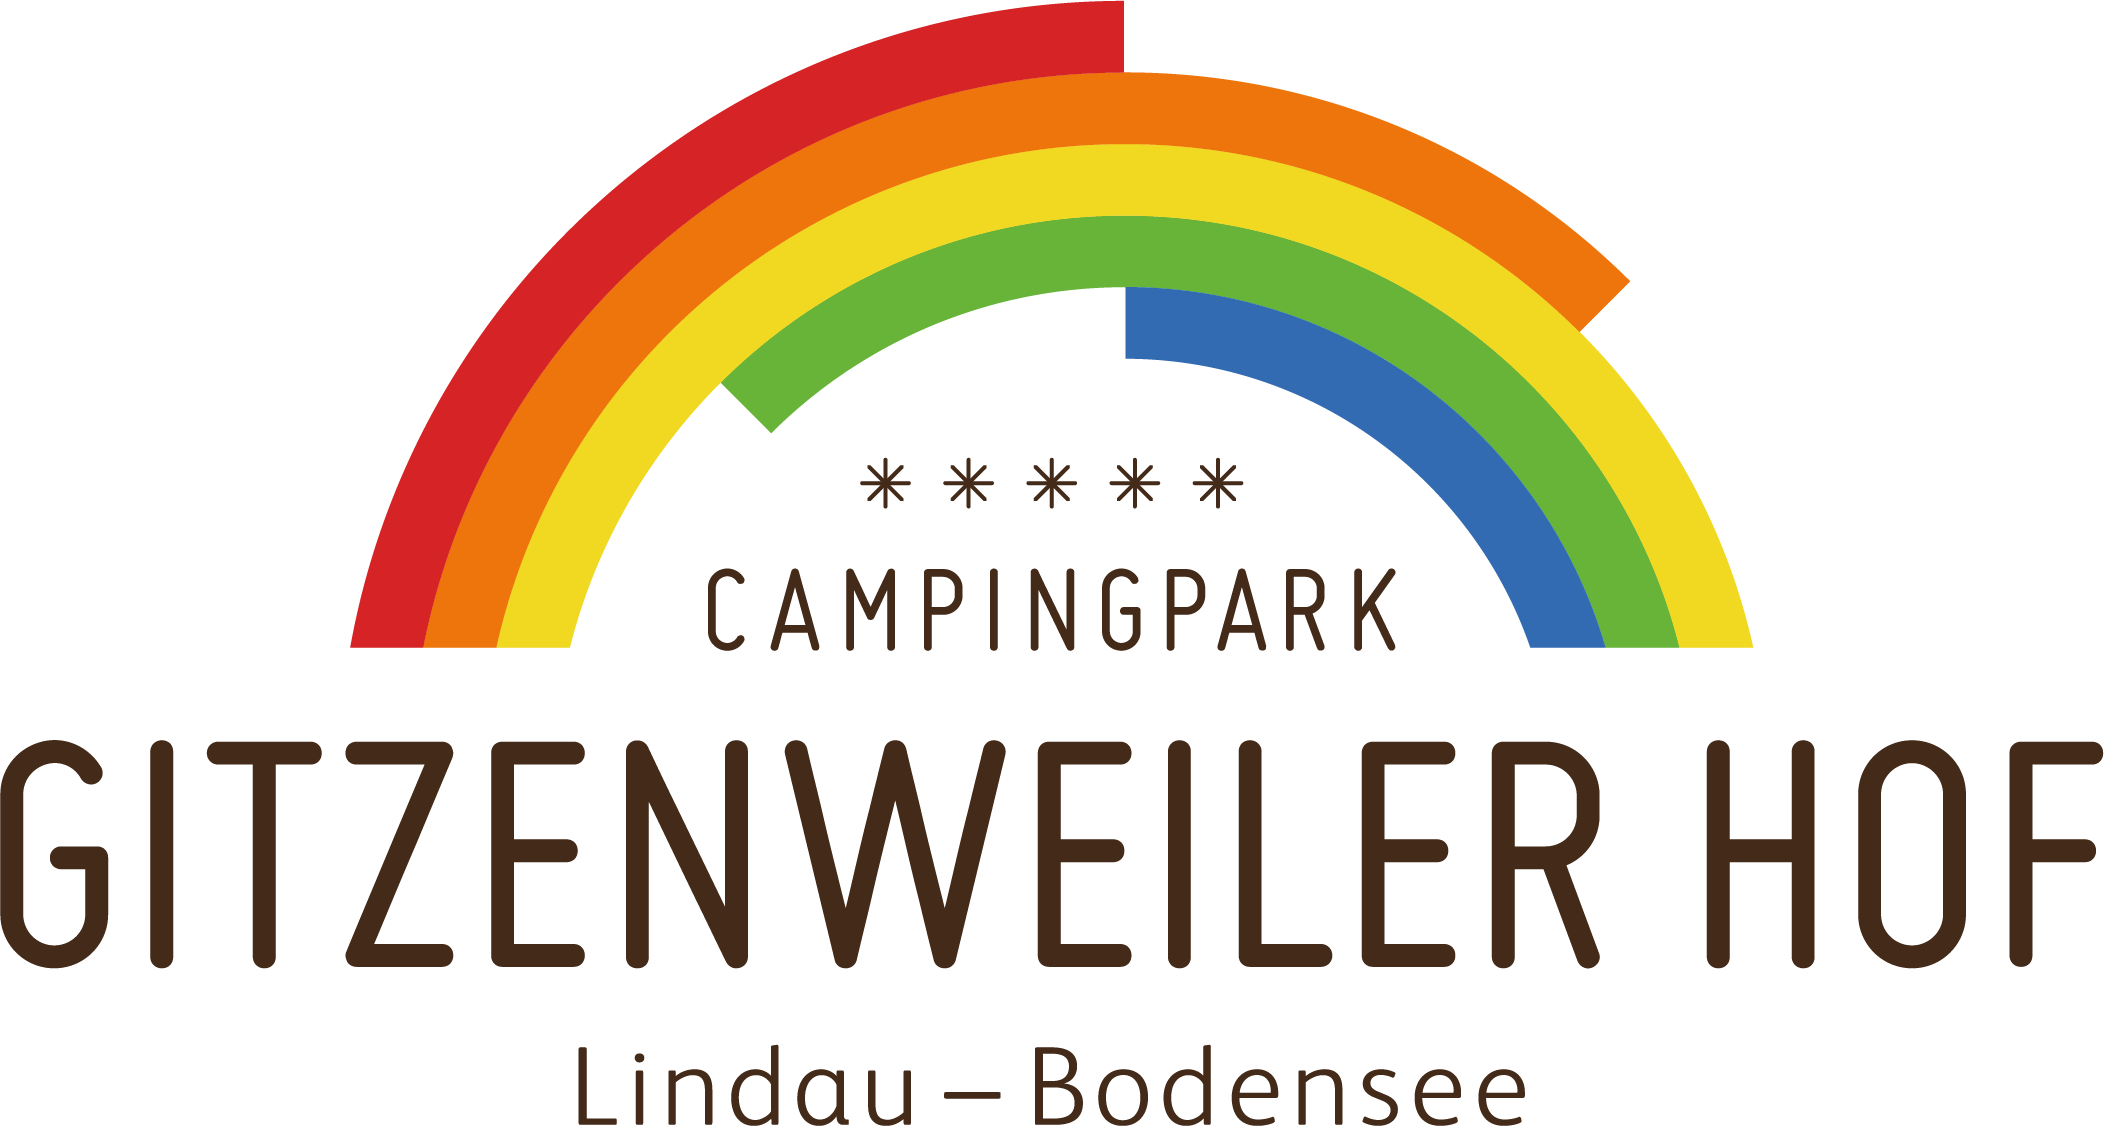 campingpark gitzenweiler hof logo transparent print